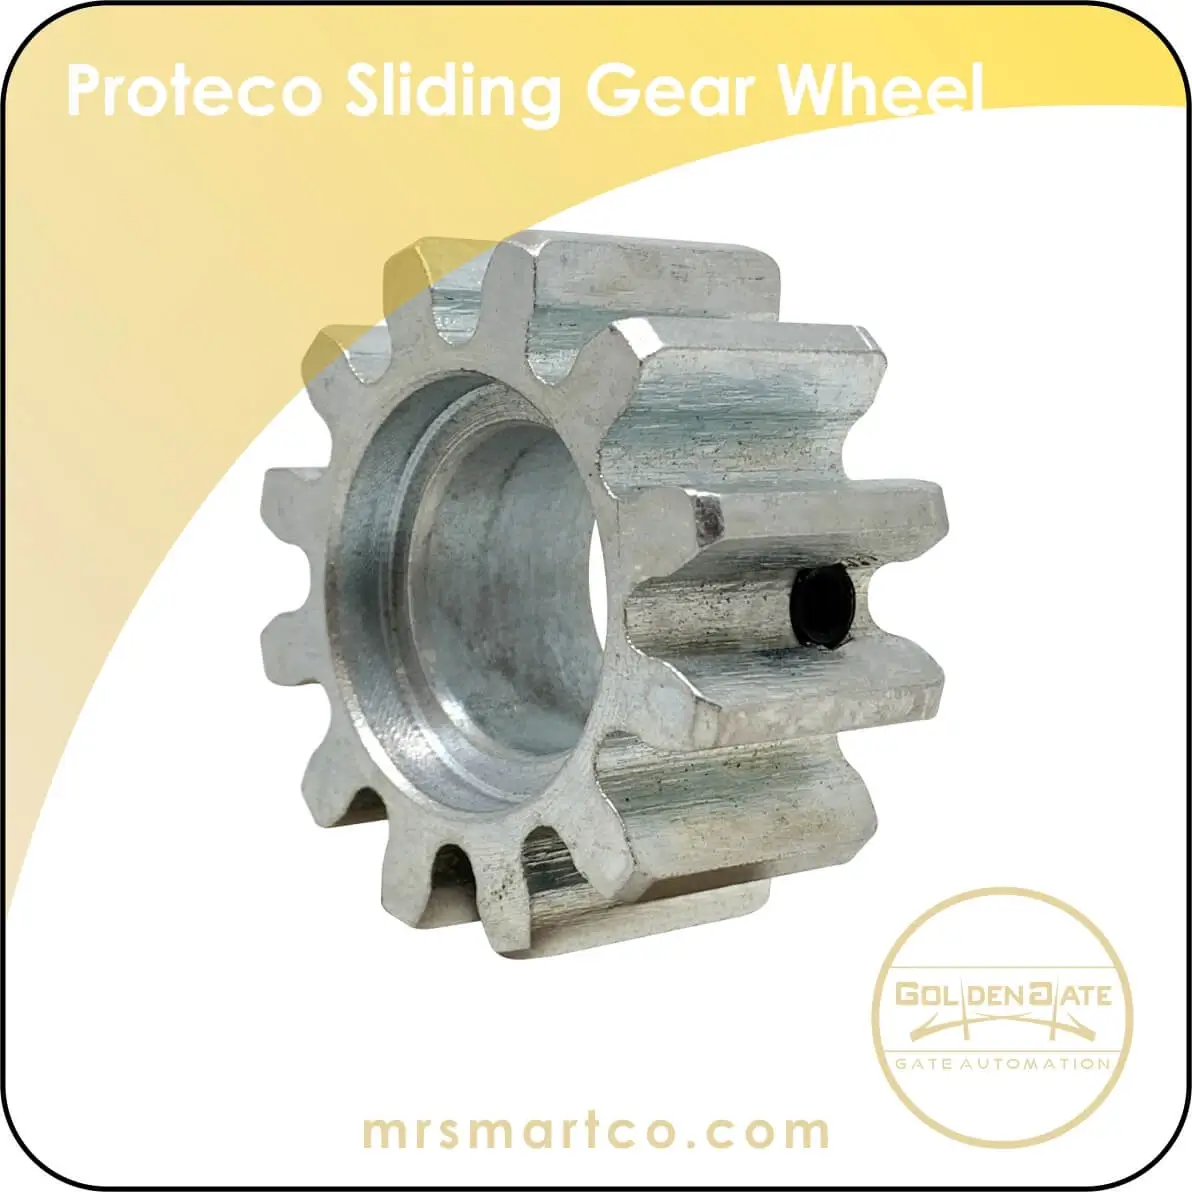 Proteco Sliding Gear Wheel